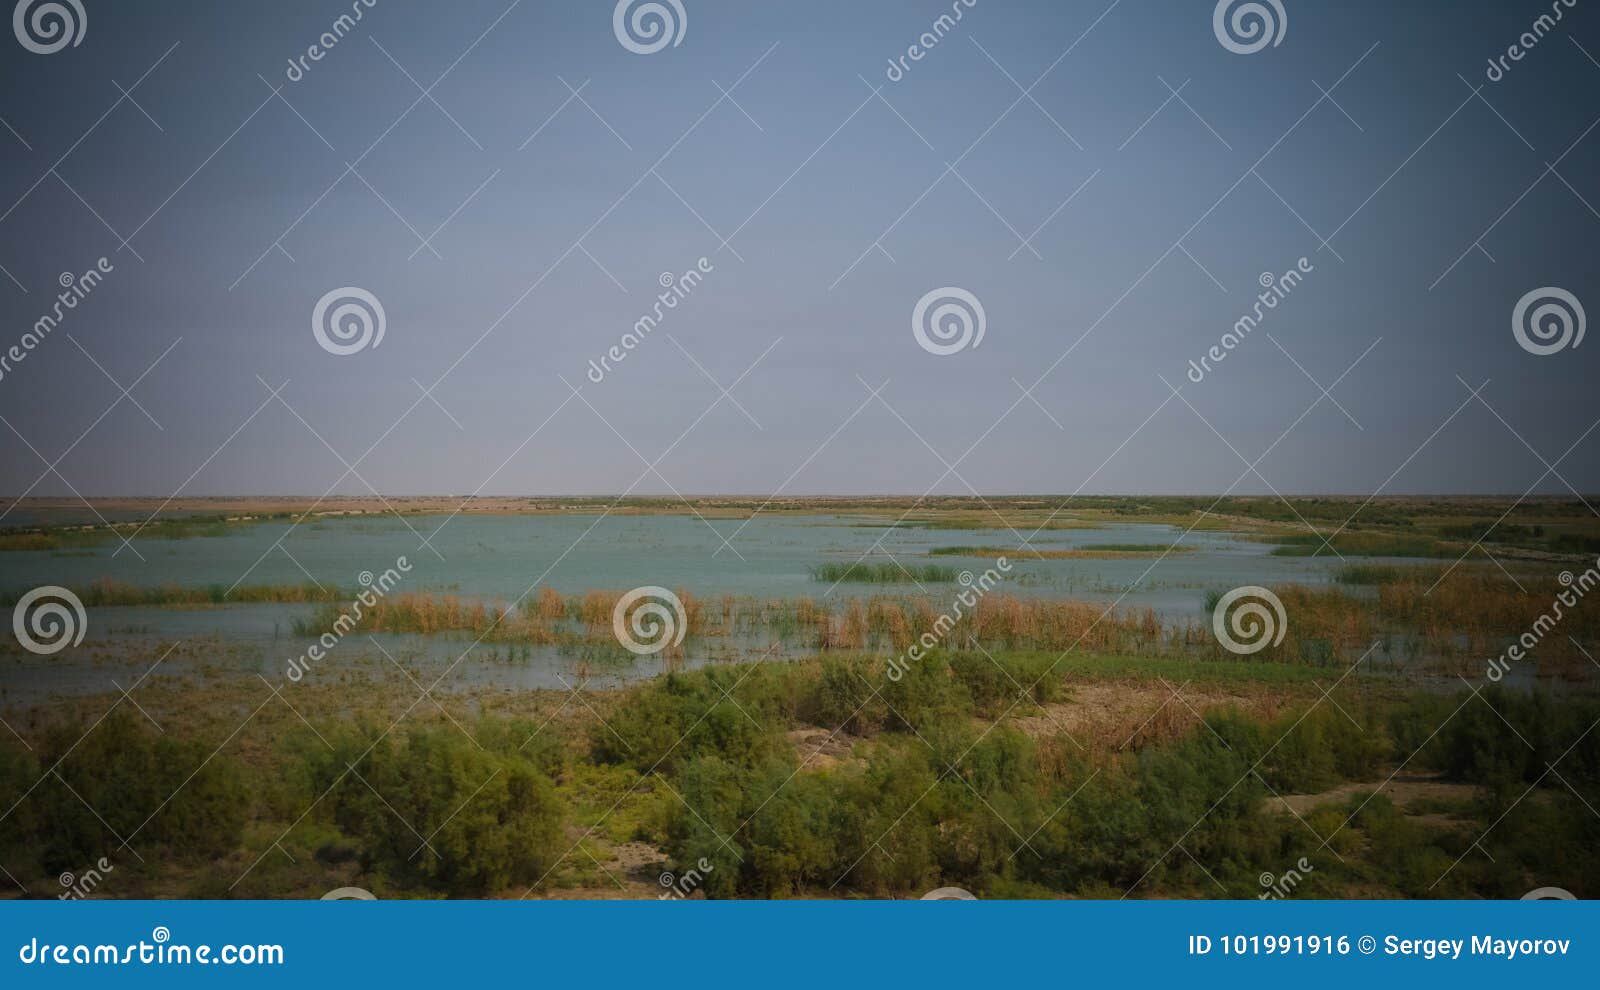 mesopotamian marshes, habitat of marsh arabs aka madans basra iraq